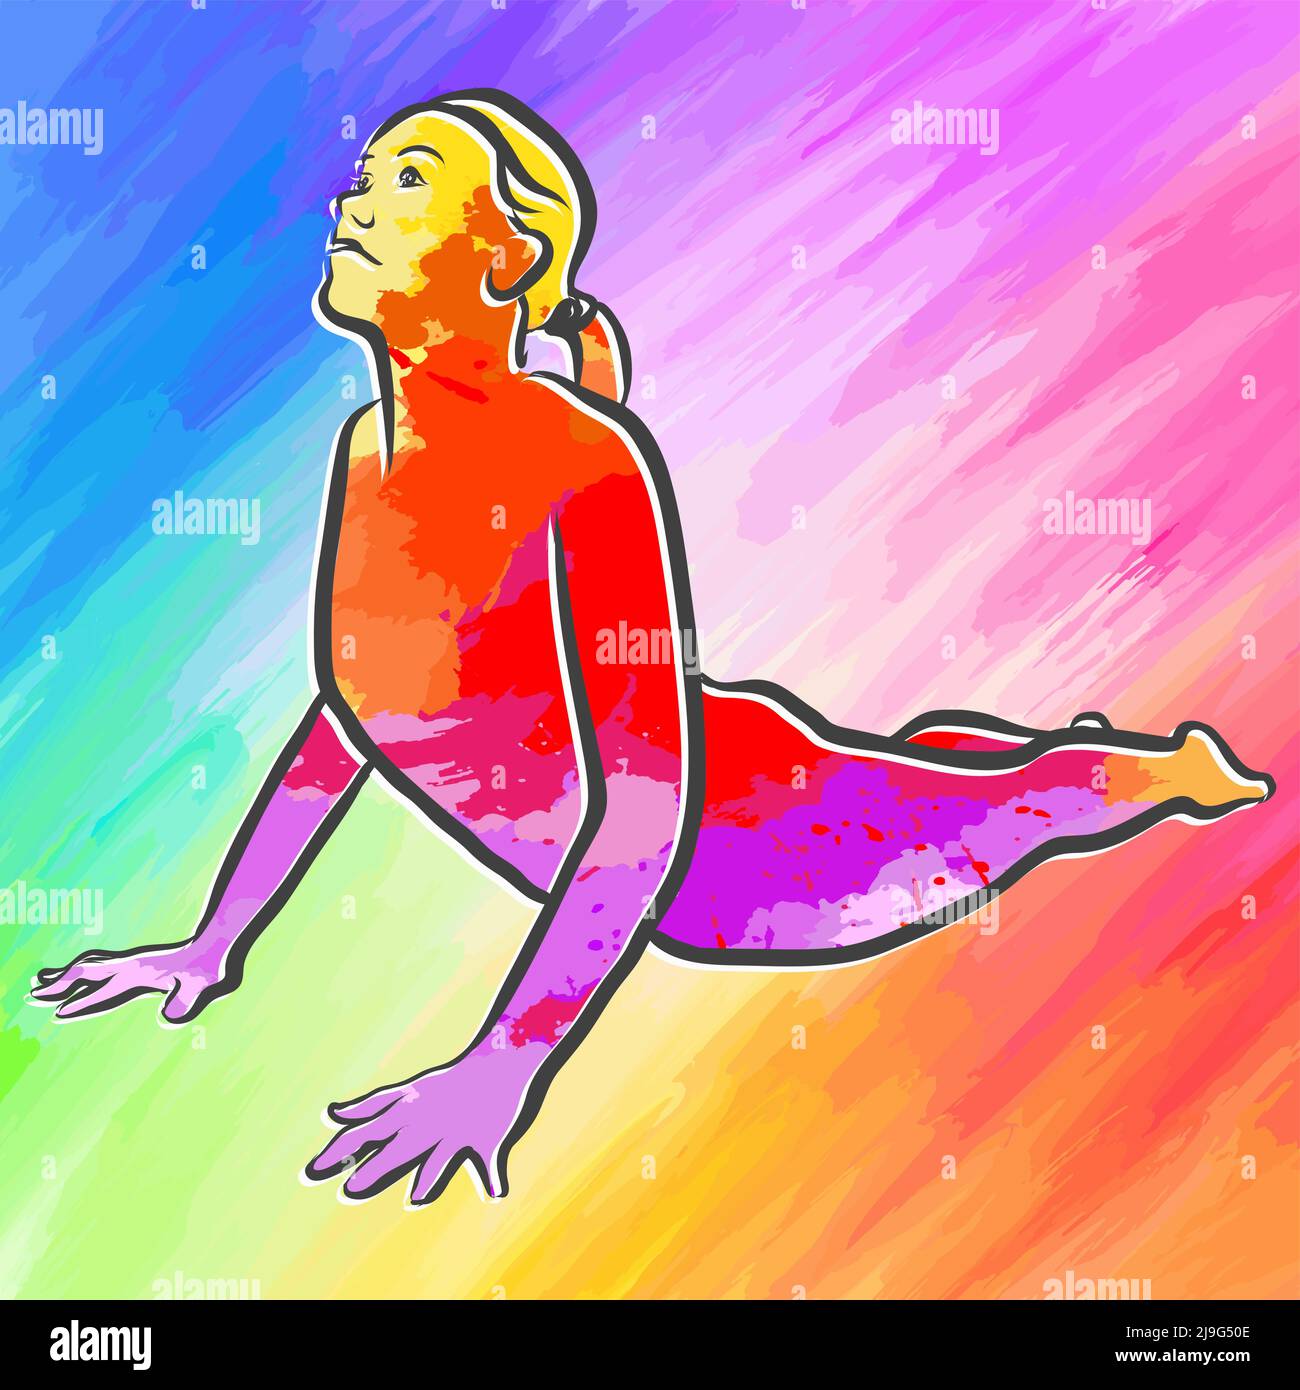 Farbenfrohe Bhujangasana Cobra Yoga-Pose. Handgezeichnete Vektorgrafik. Zentriertes Layout für Web- und Druckzwecke. Stock Vektor